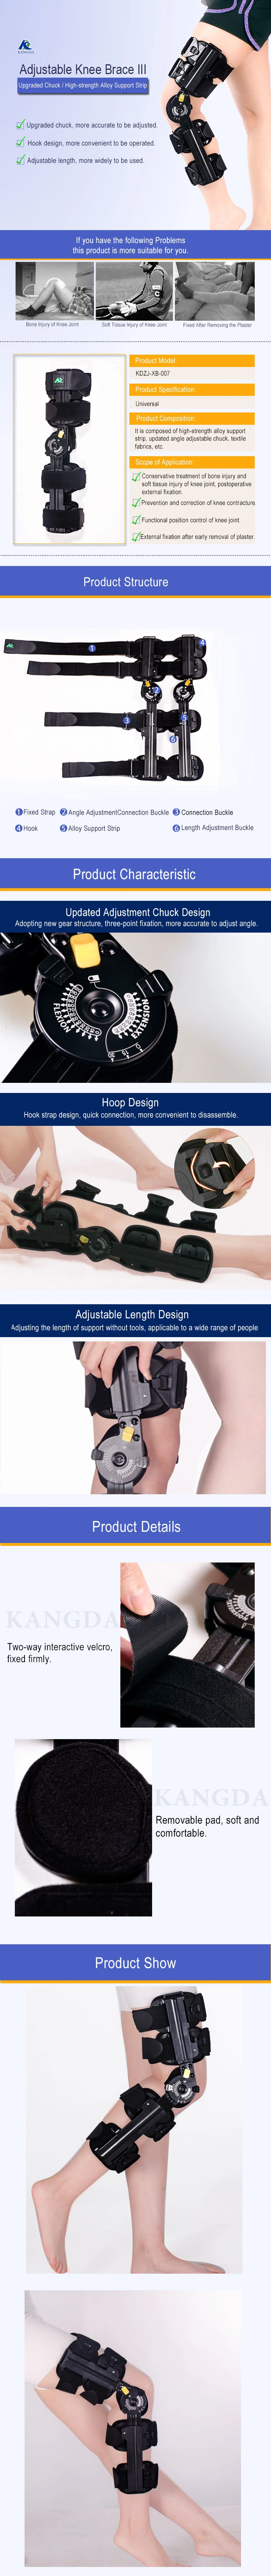 New Post-Op Knee Brace K1 Broader Adjustable ROM Knee Brace